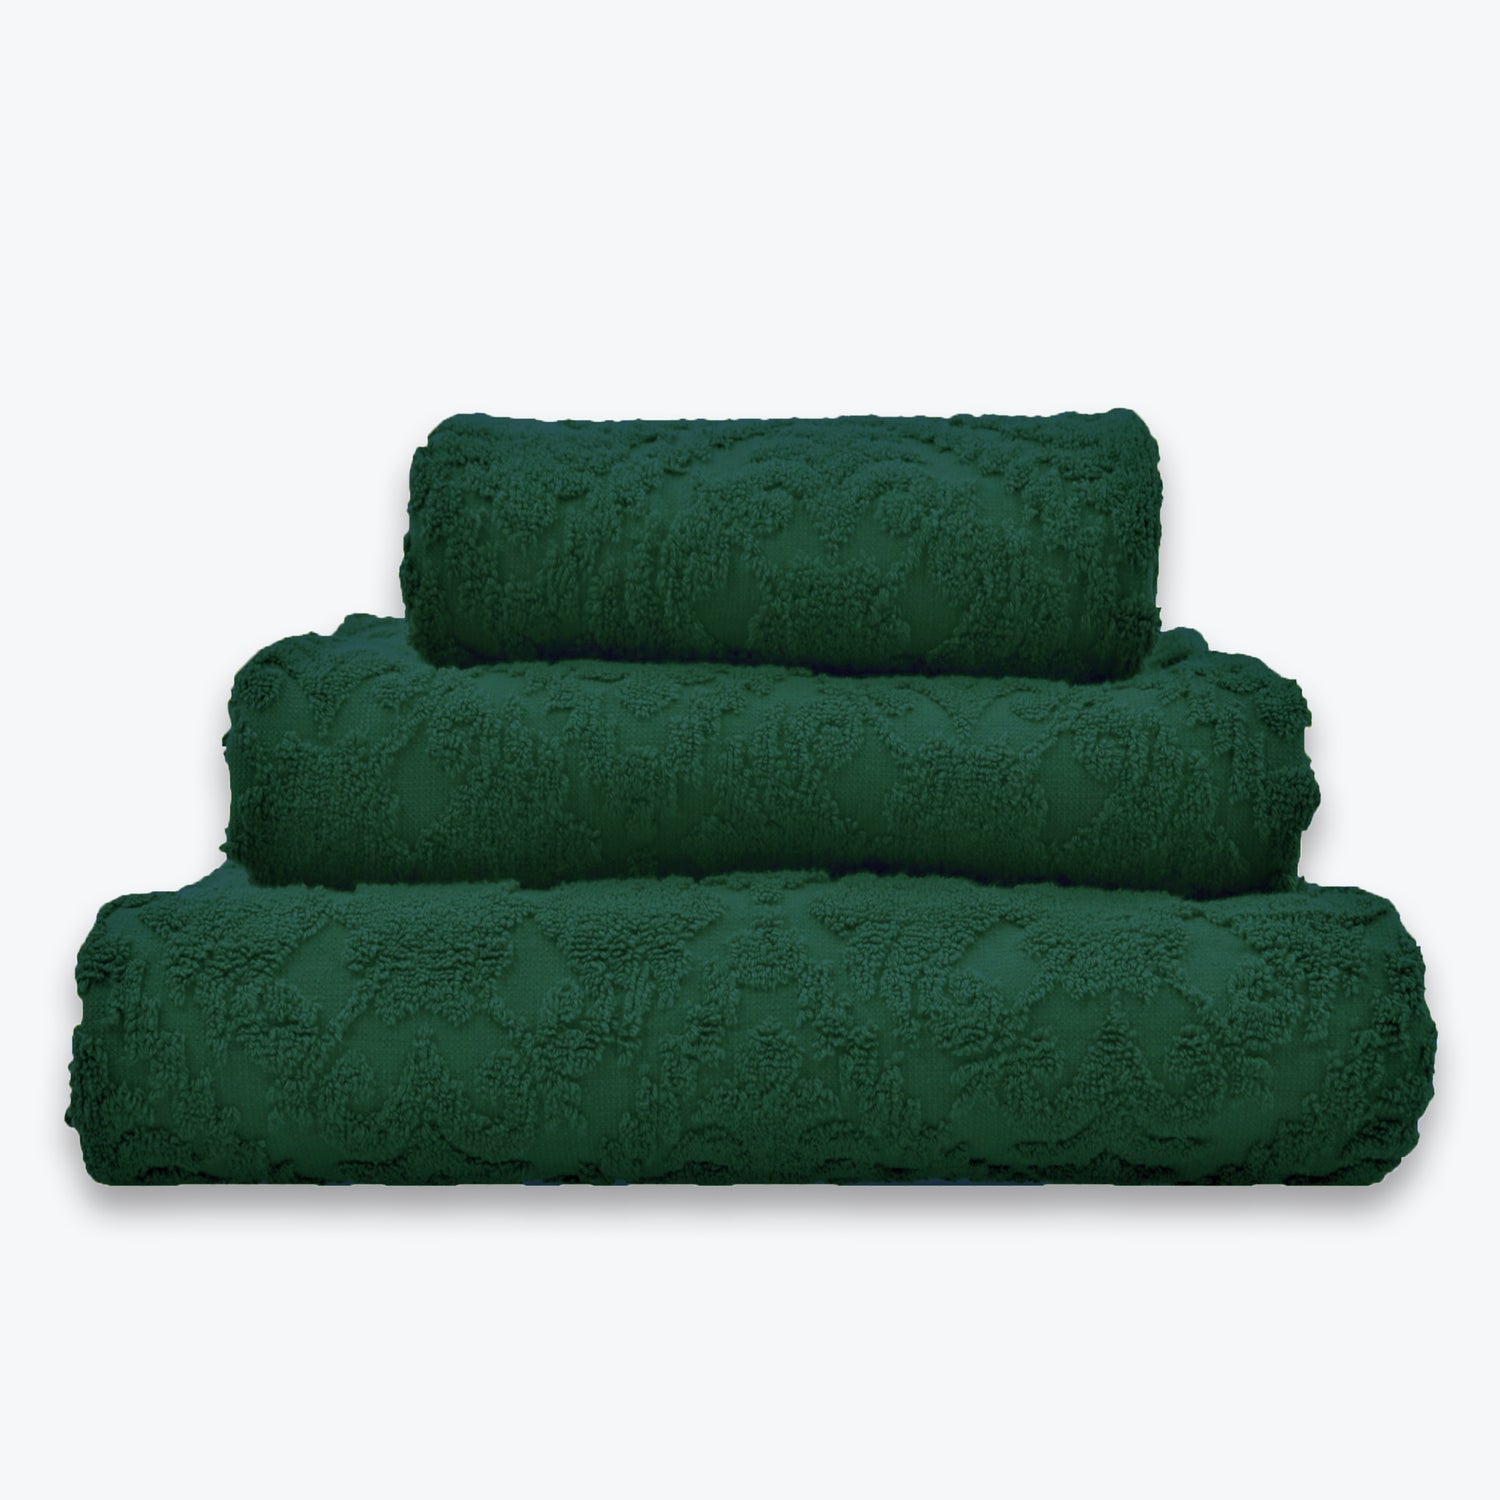 Allure Jacquard Wholesale Fabric in Green